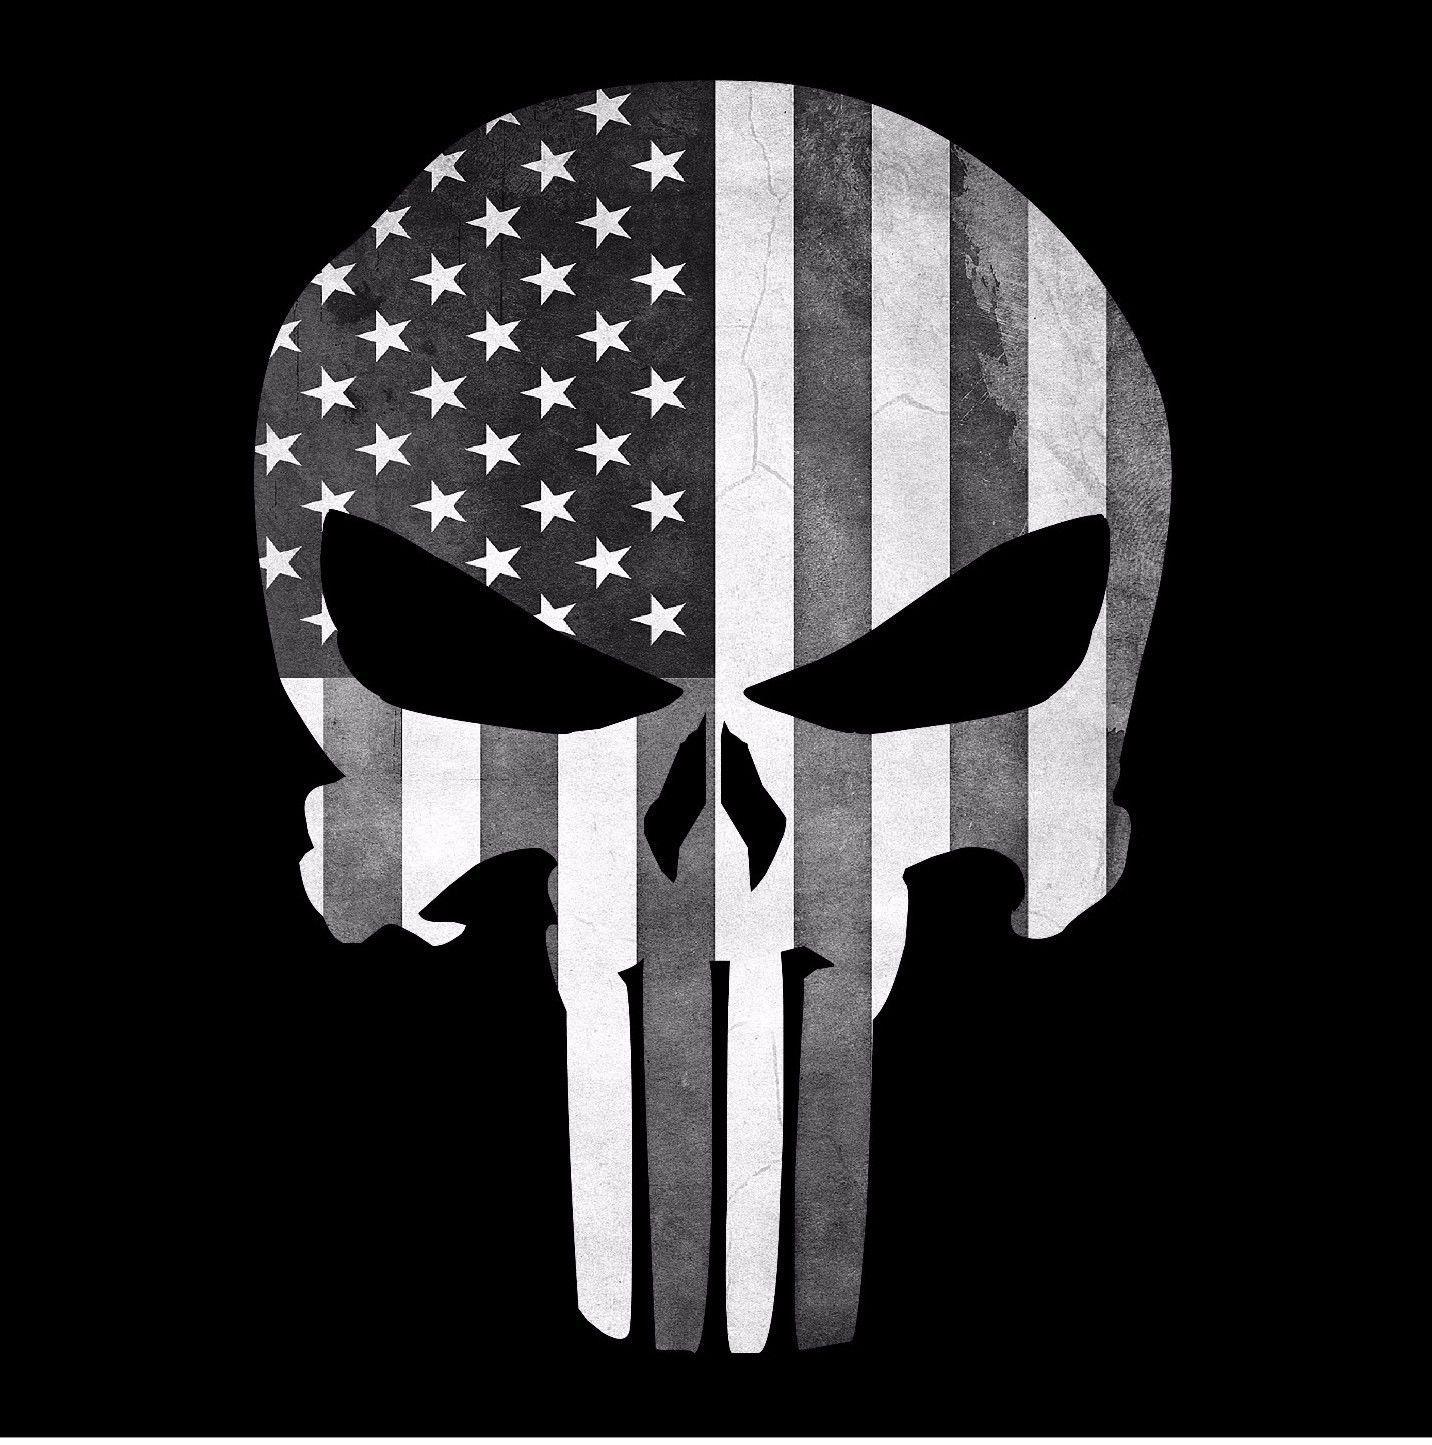 Black and White Skull Logo - Punisher Skull American Flag (Black and White) Decal Sticker Graphic ...